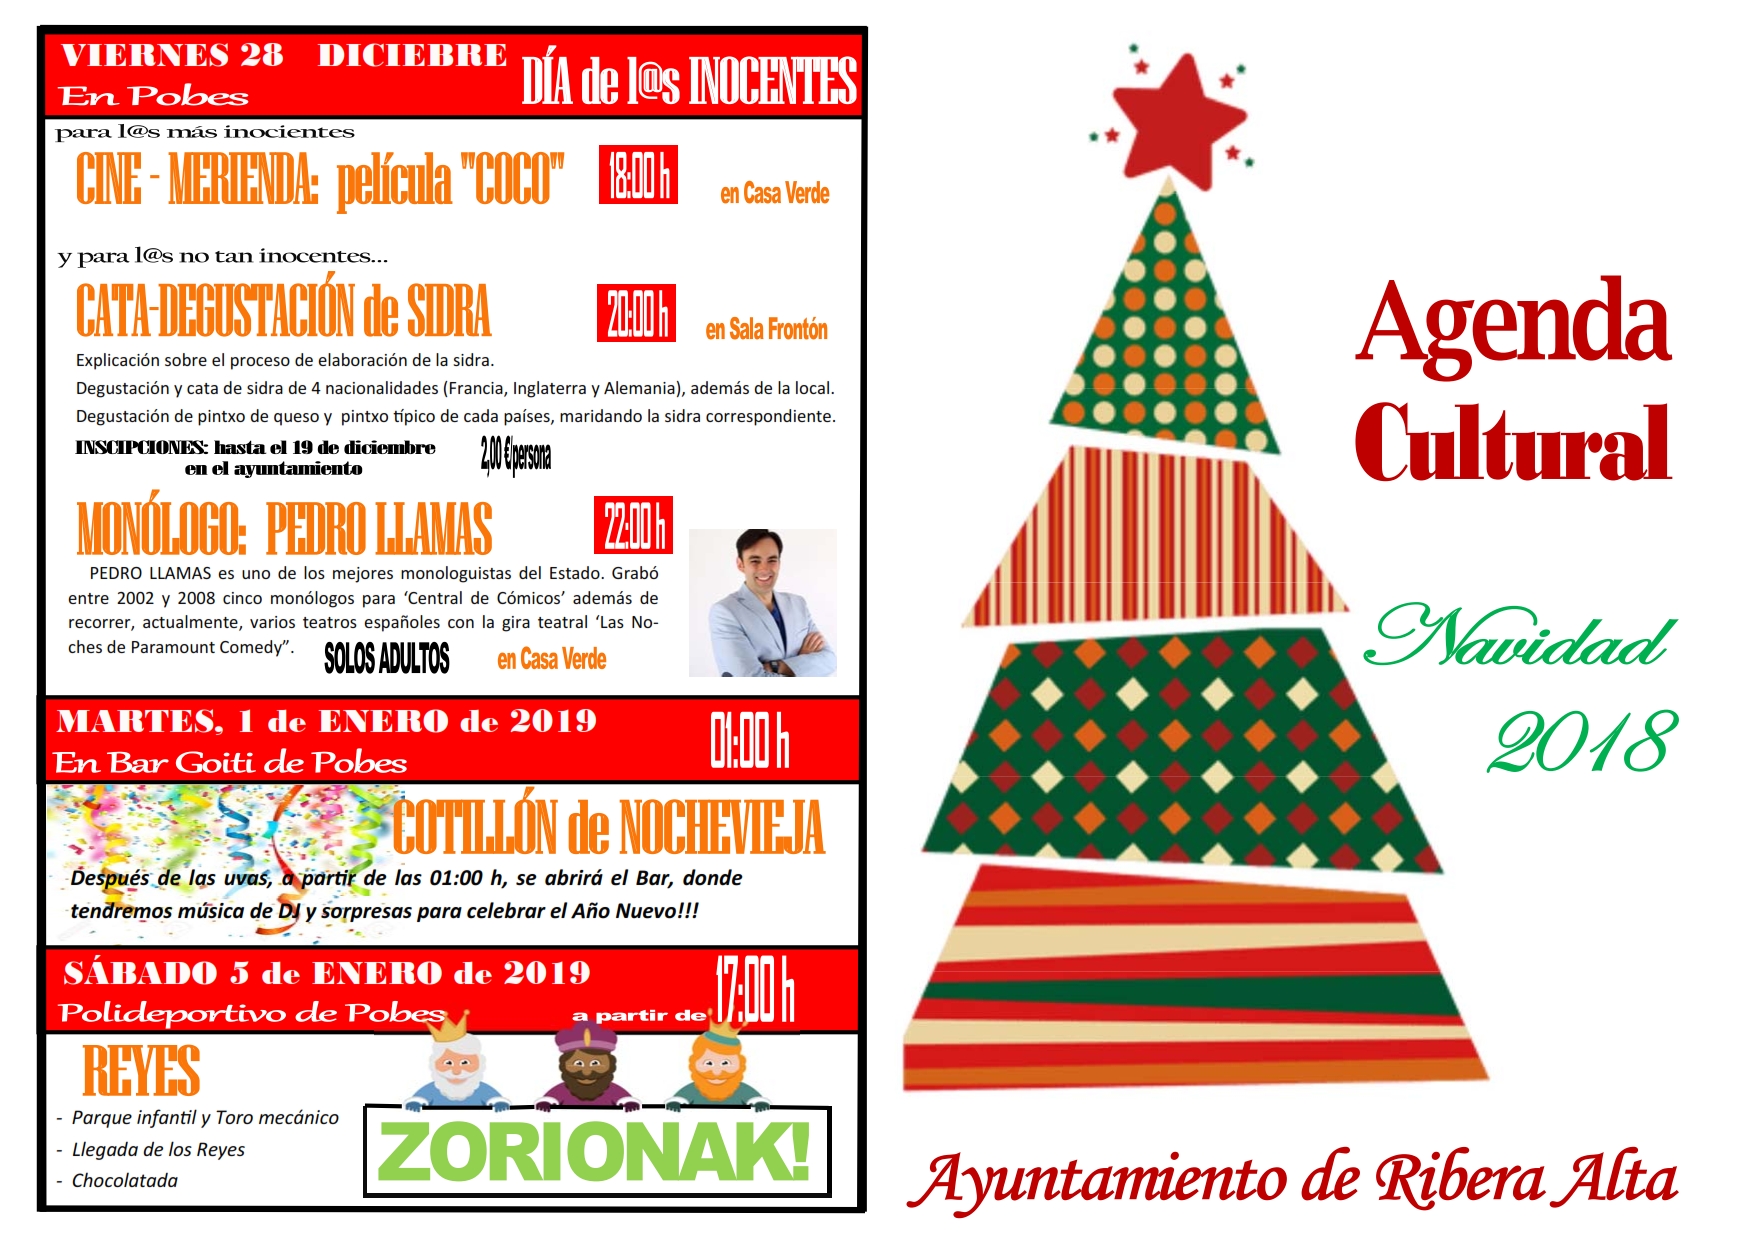 AGENDA CULTURAL, Programa de Navidad 2018 – 2019